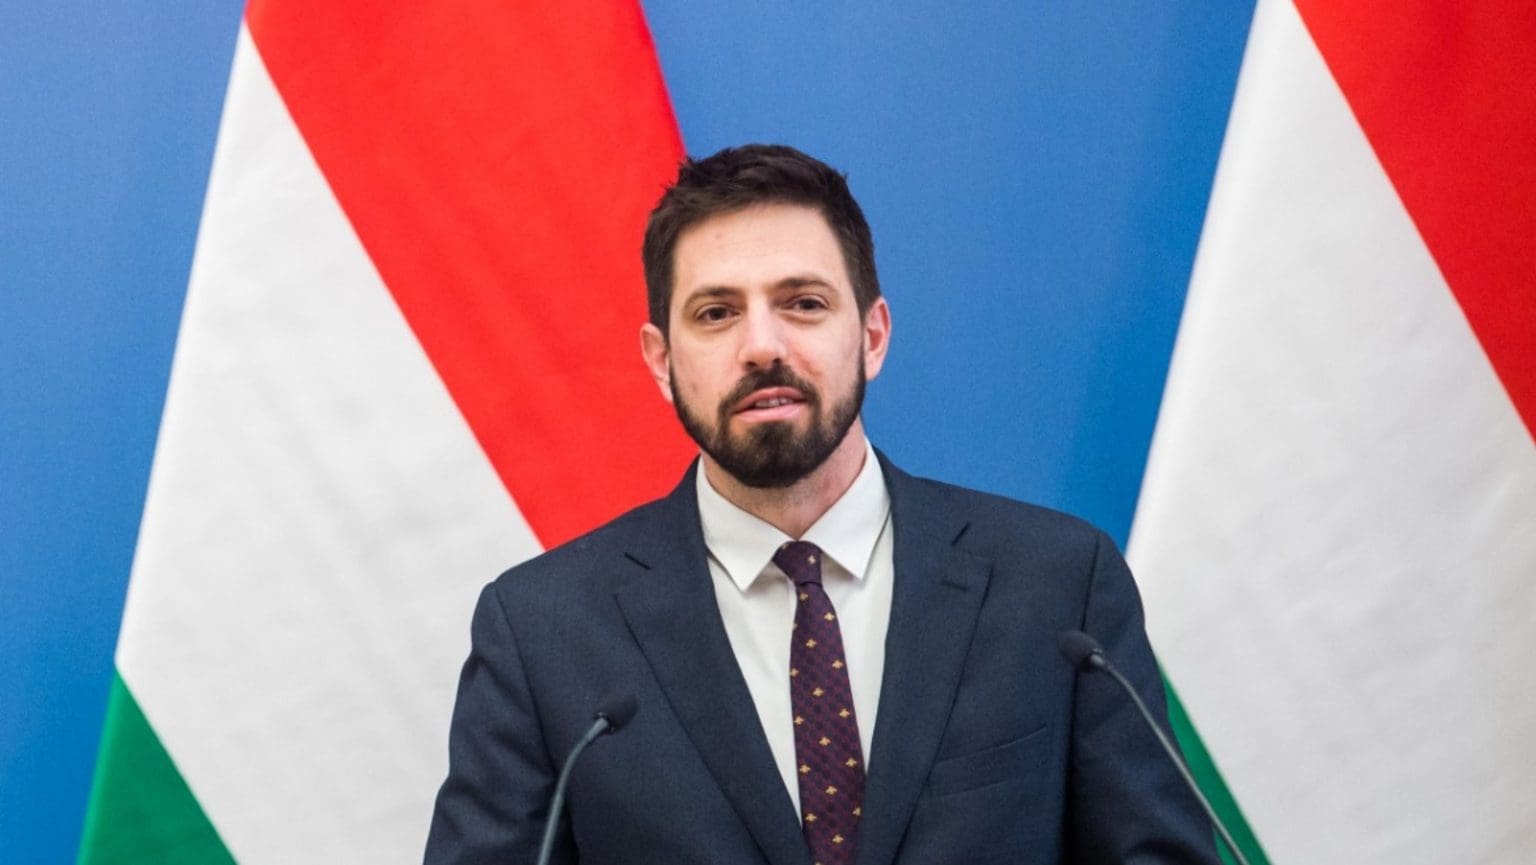 Hungarian State Secretary: ‘Hungary Will Continue to Support Ukraine’